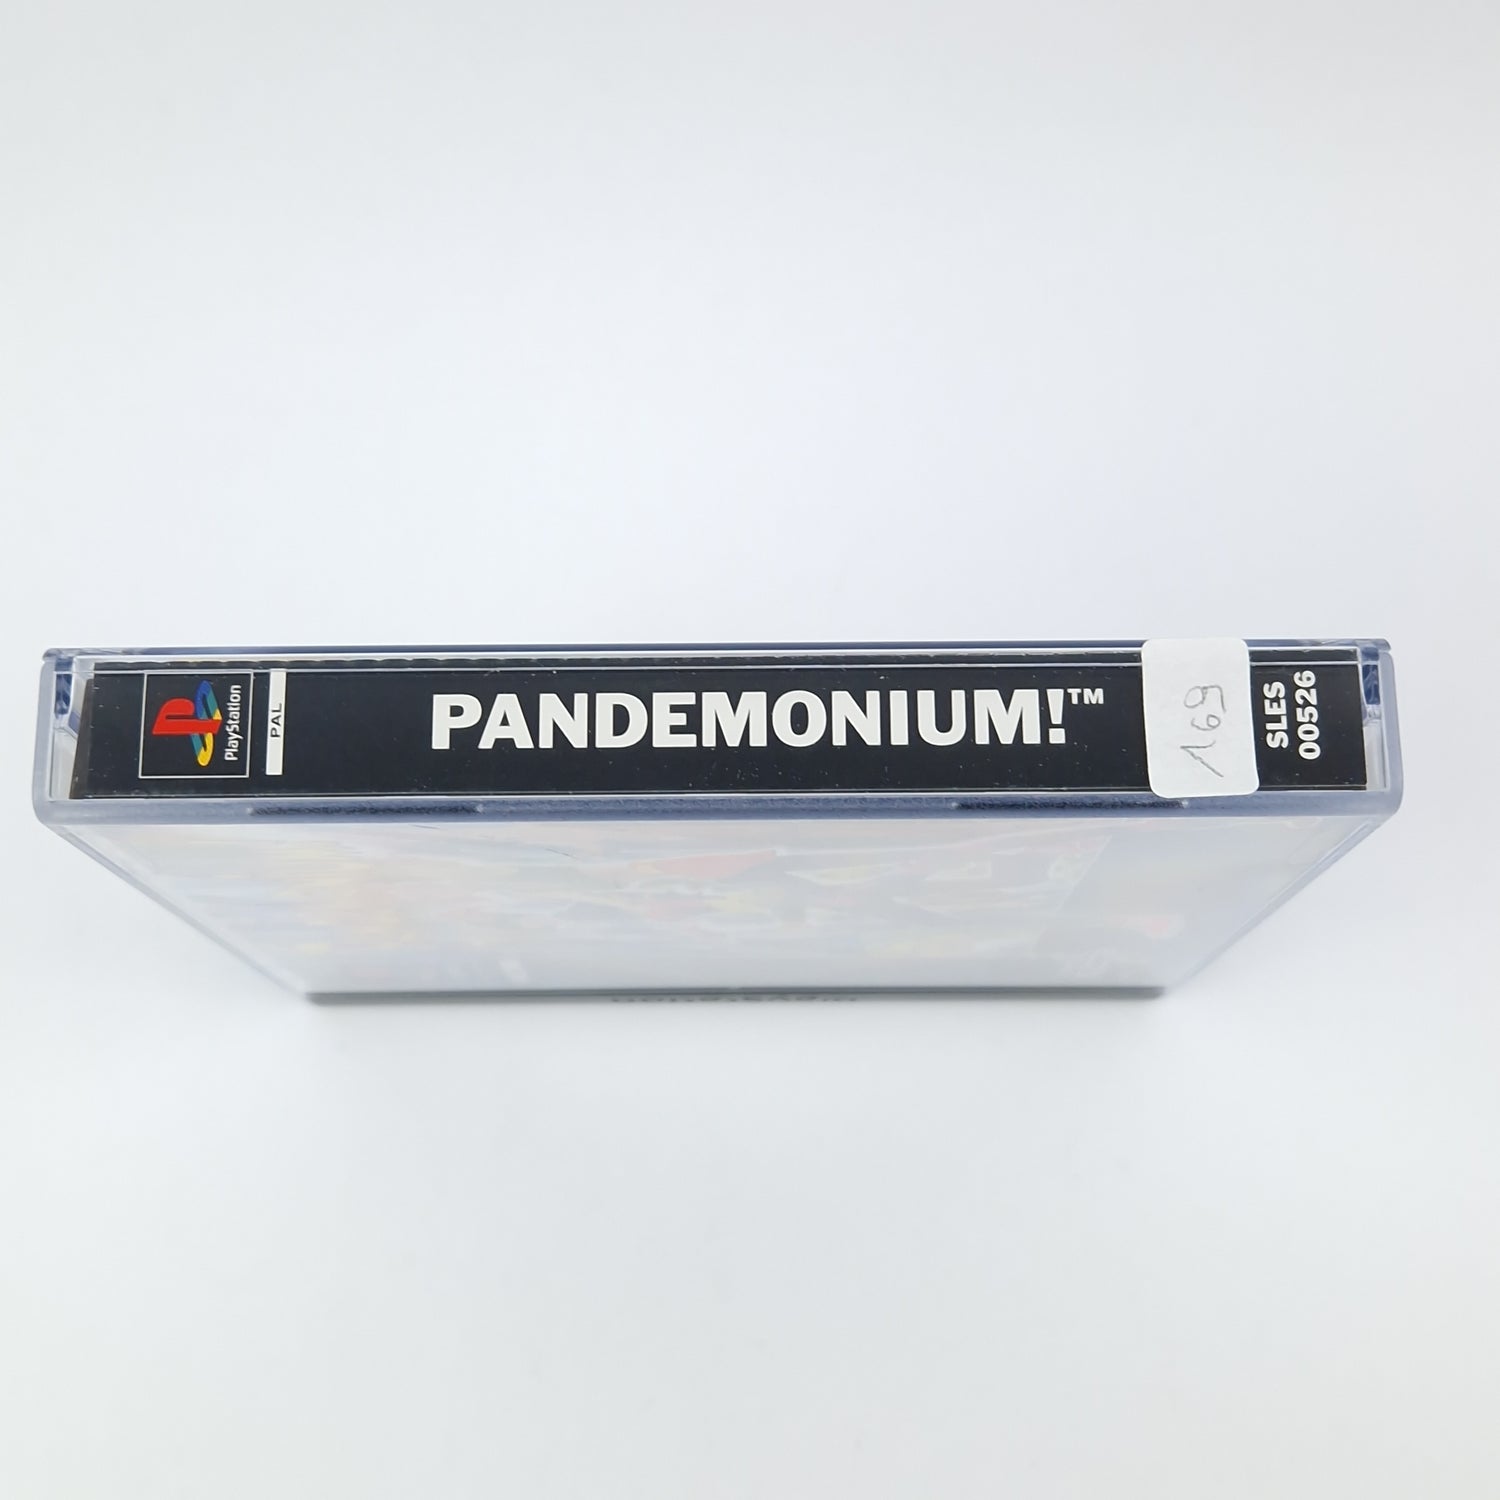 Playstation 1 Spiel : Pandemonium ! - CD Anleitung OVP | SONY PS1 PSX PAL